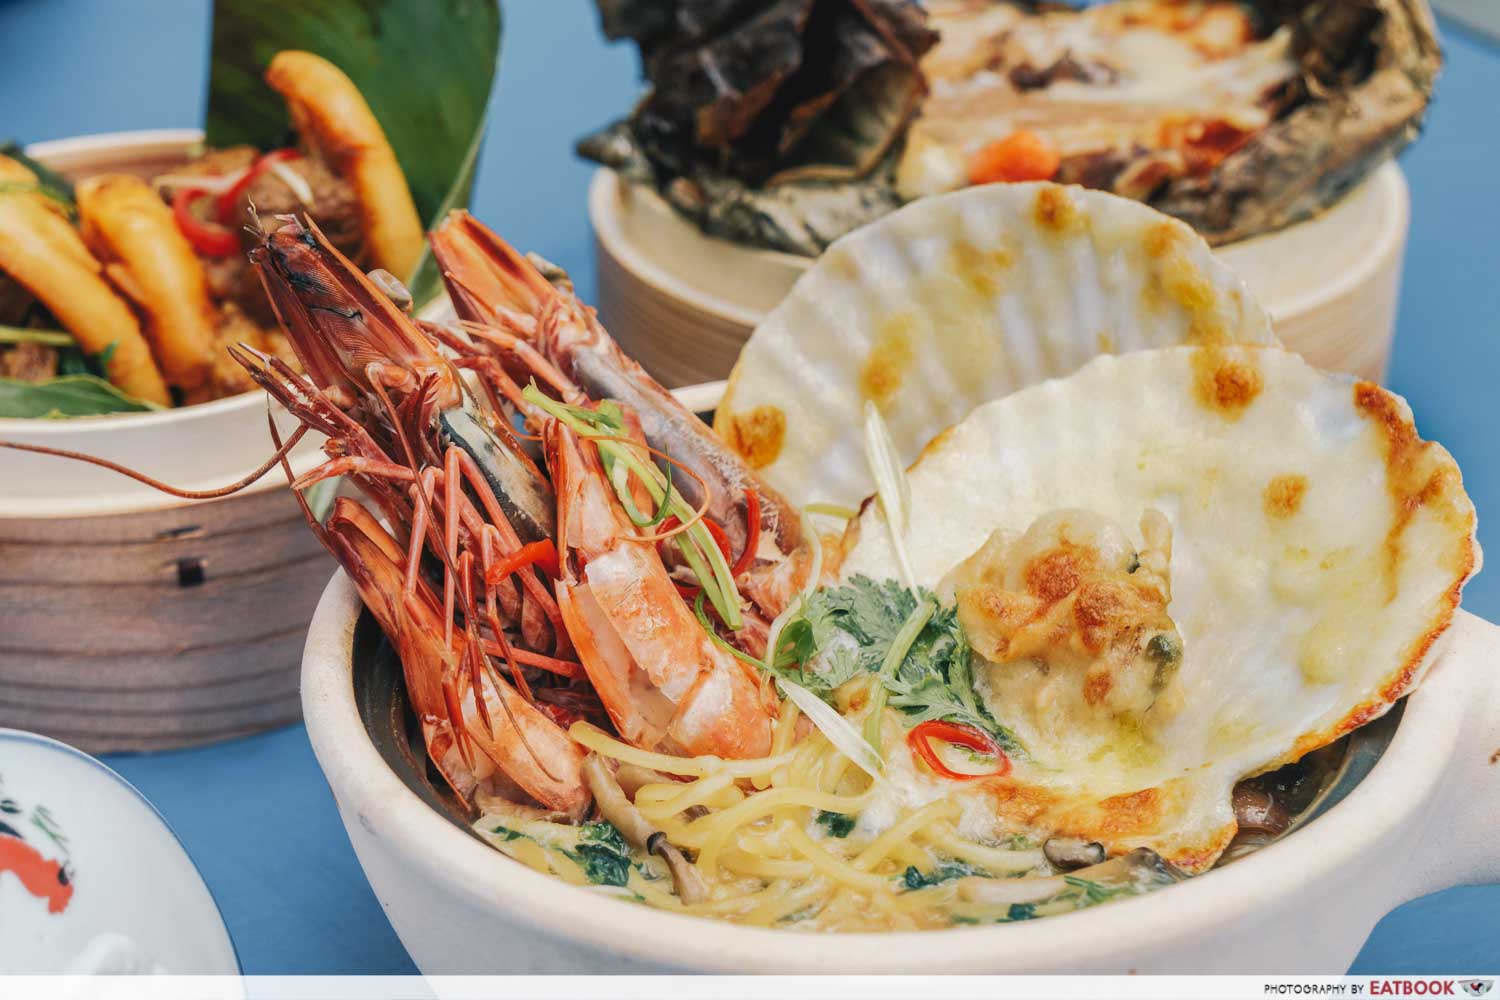 May Restaurants 2019 - Herit8ge claypot seafood mapo tofu pasta